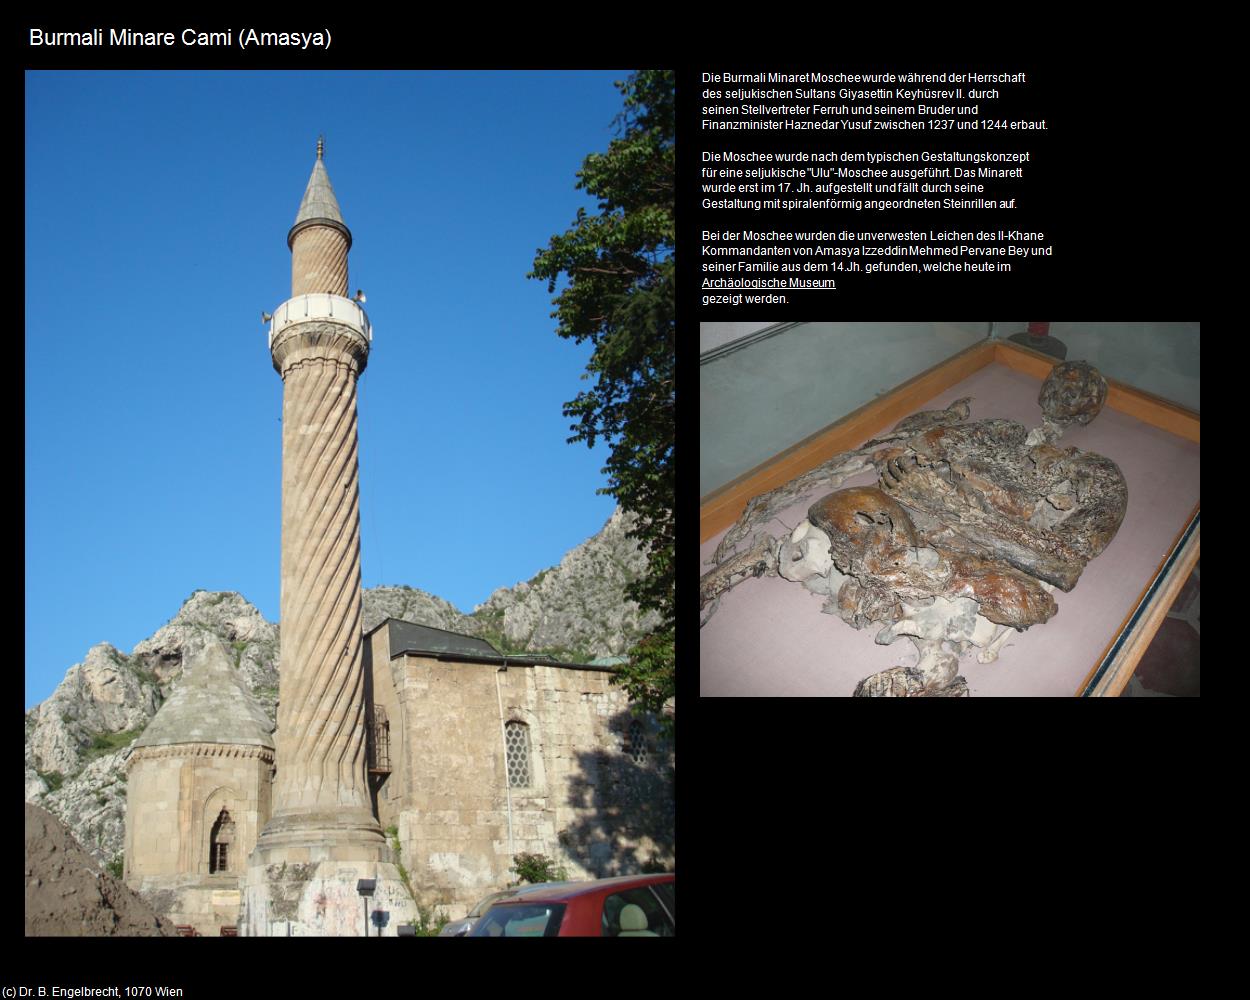 Burmali Minare Cami (Amasya) in TÜRKEI(c)B.Engelbrecht